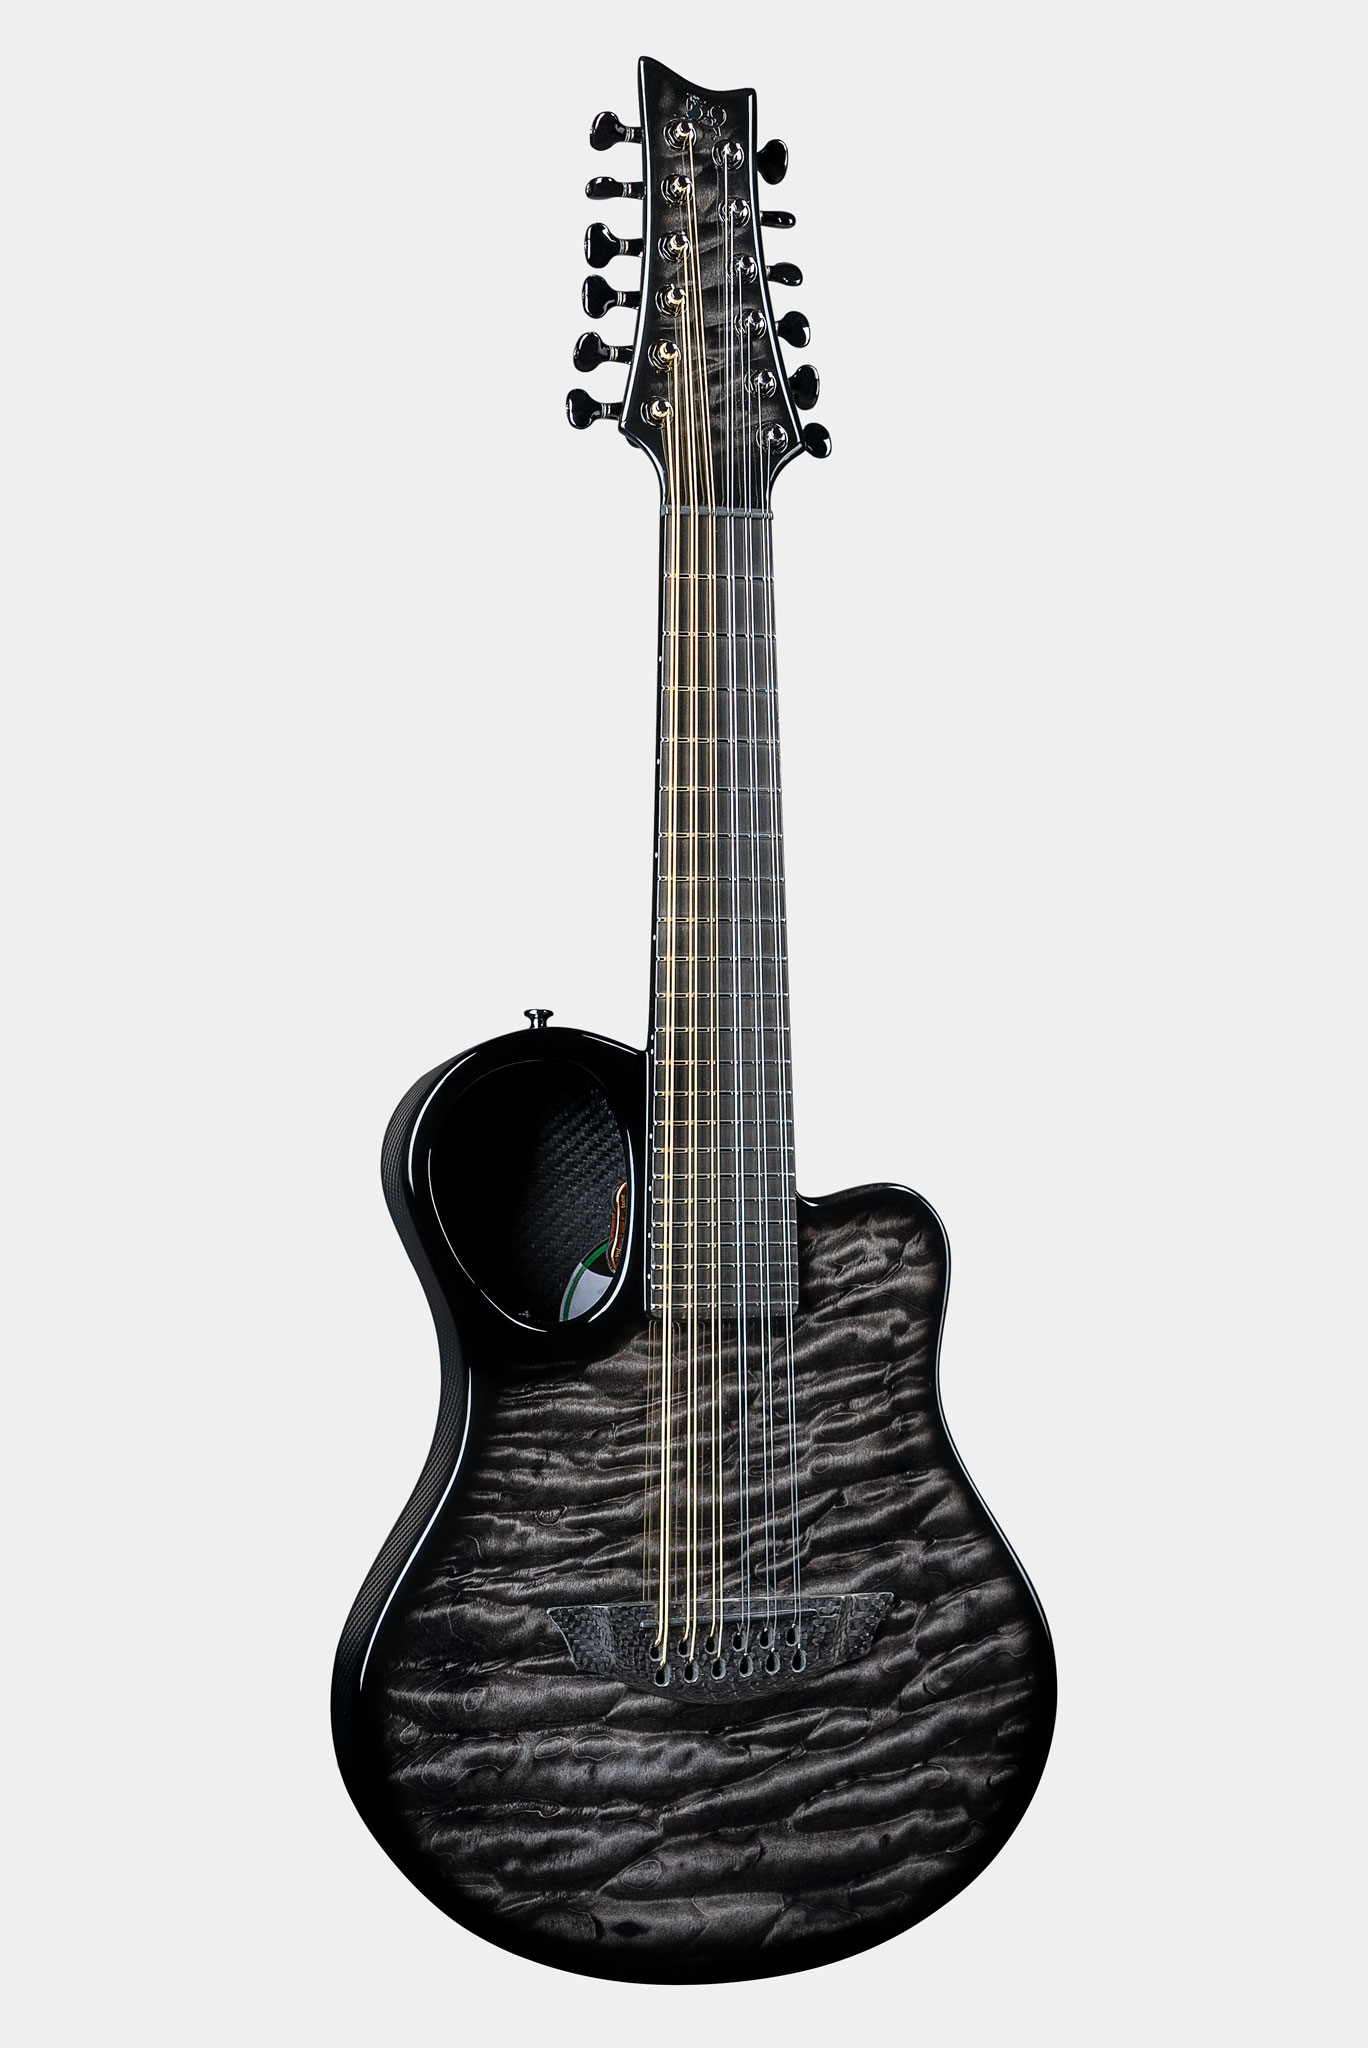 Emerald Amicus Carbon Fiber Guitar in Quilted Maple Black